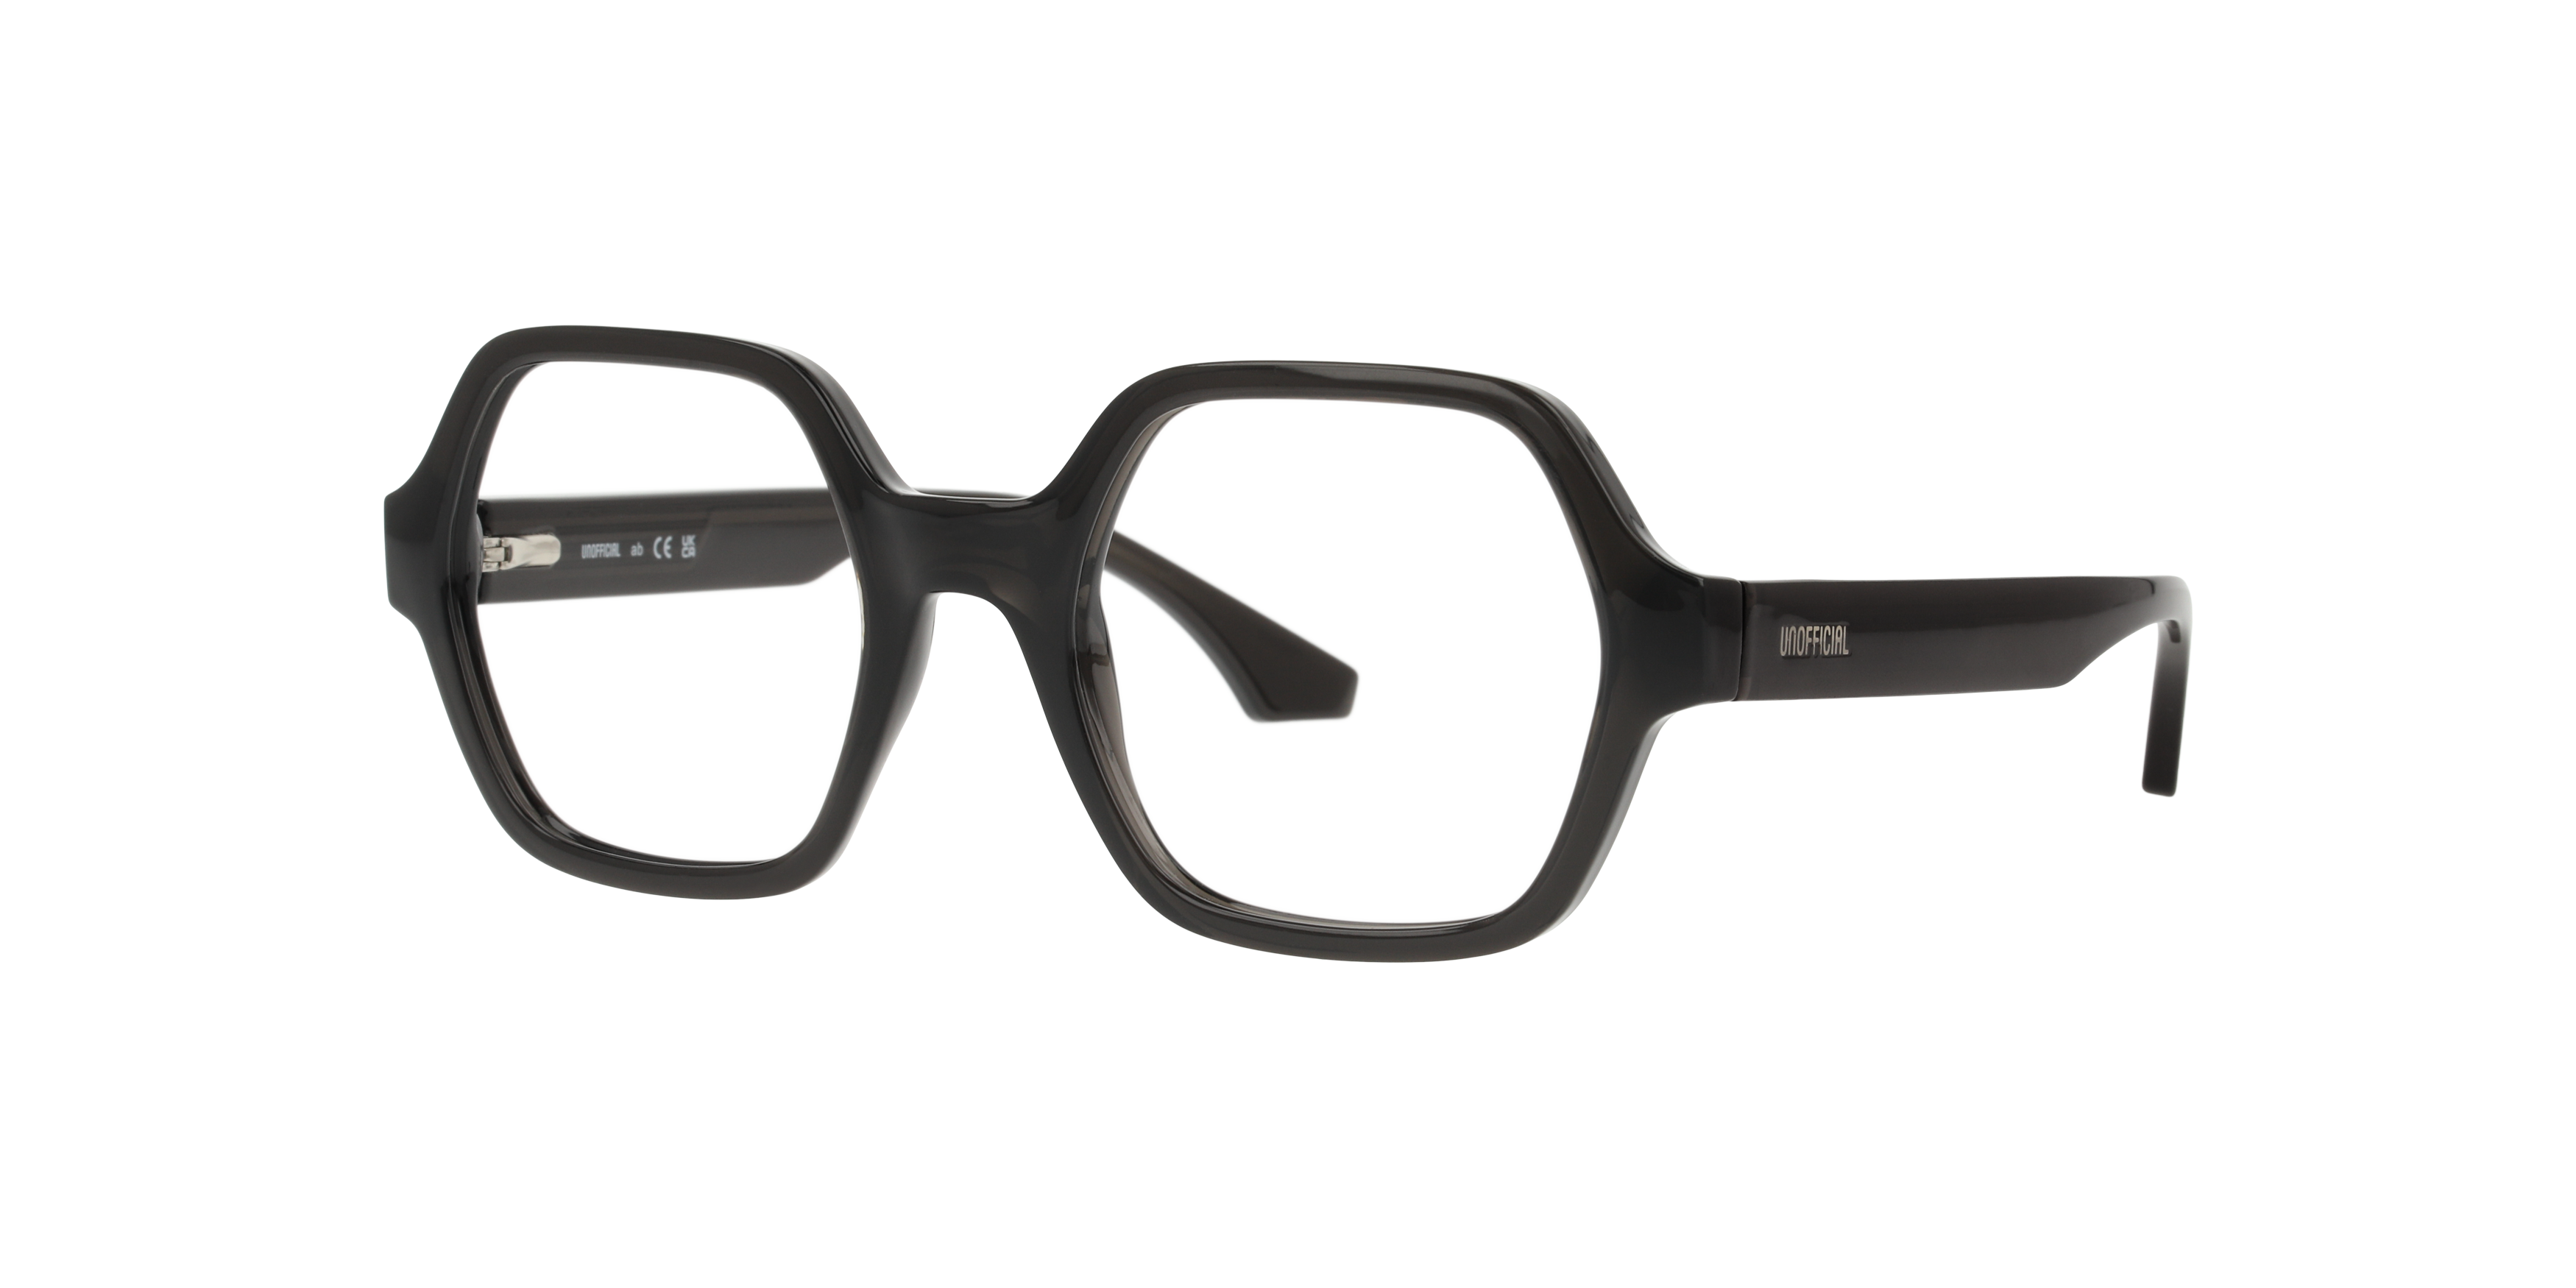 Angle_Left01 Unofficial UO3044 Glasses Transparent / Transparent, Black